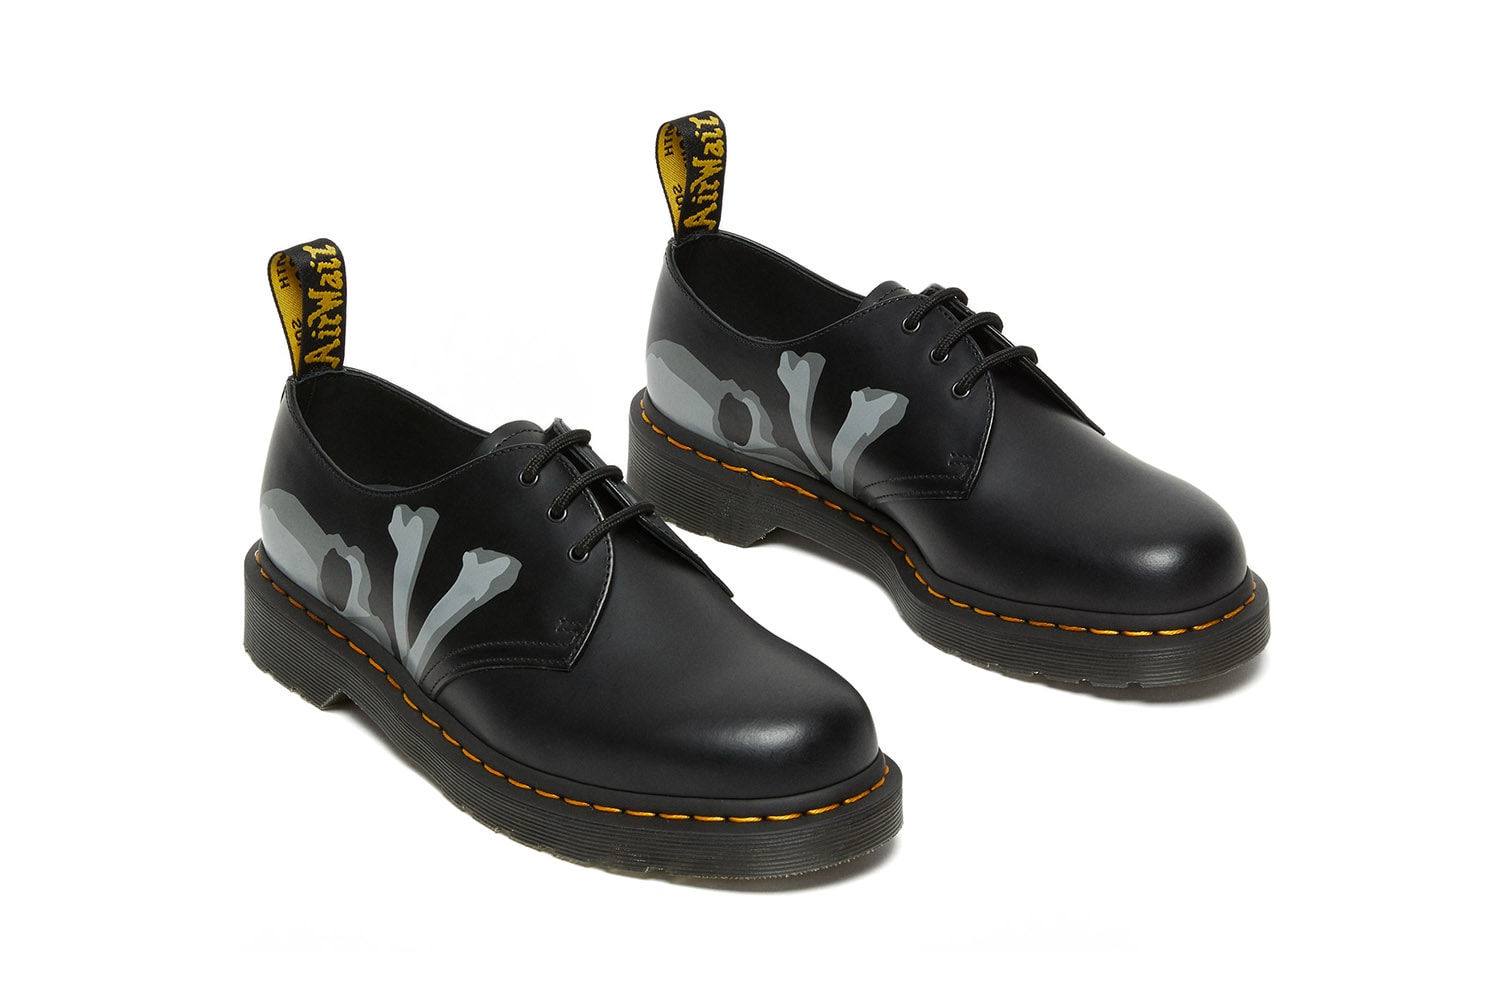 Dr. Martens x A BATHING APE x mastermind JAPAN Footwear Collaboration